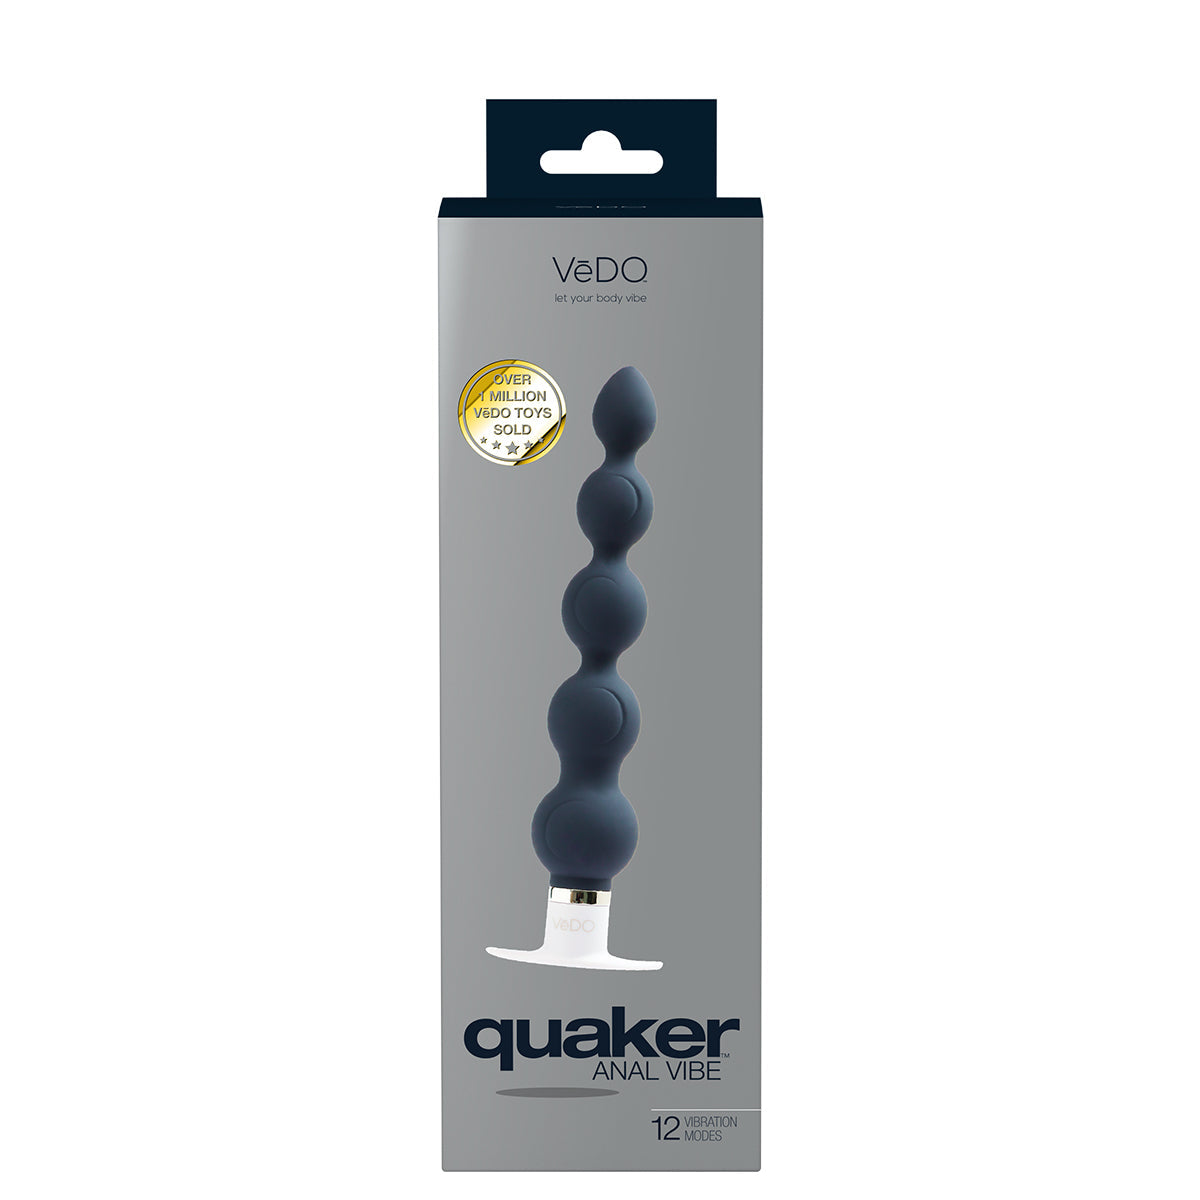 VeDO's Quaker 12 Unique Vibration Modes Anal Vibrator